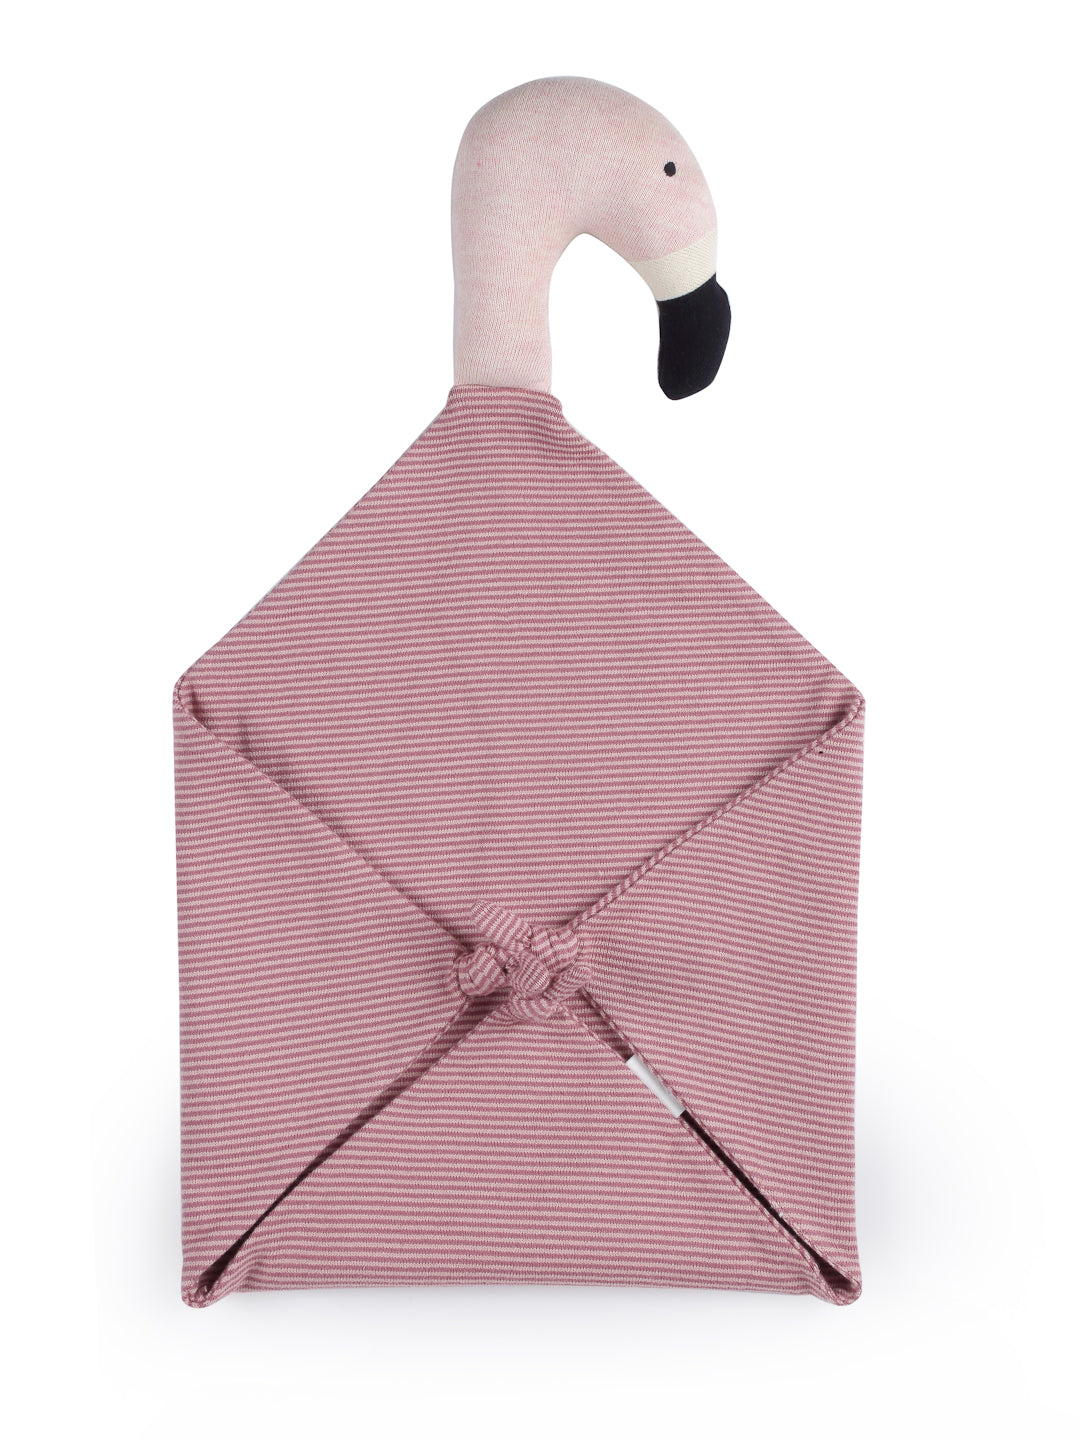 Flamingo Comforter, Soft Toy for Newborn baby